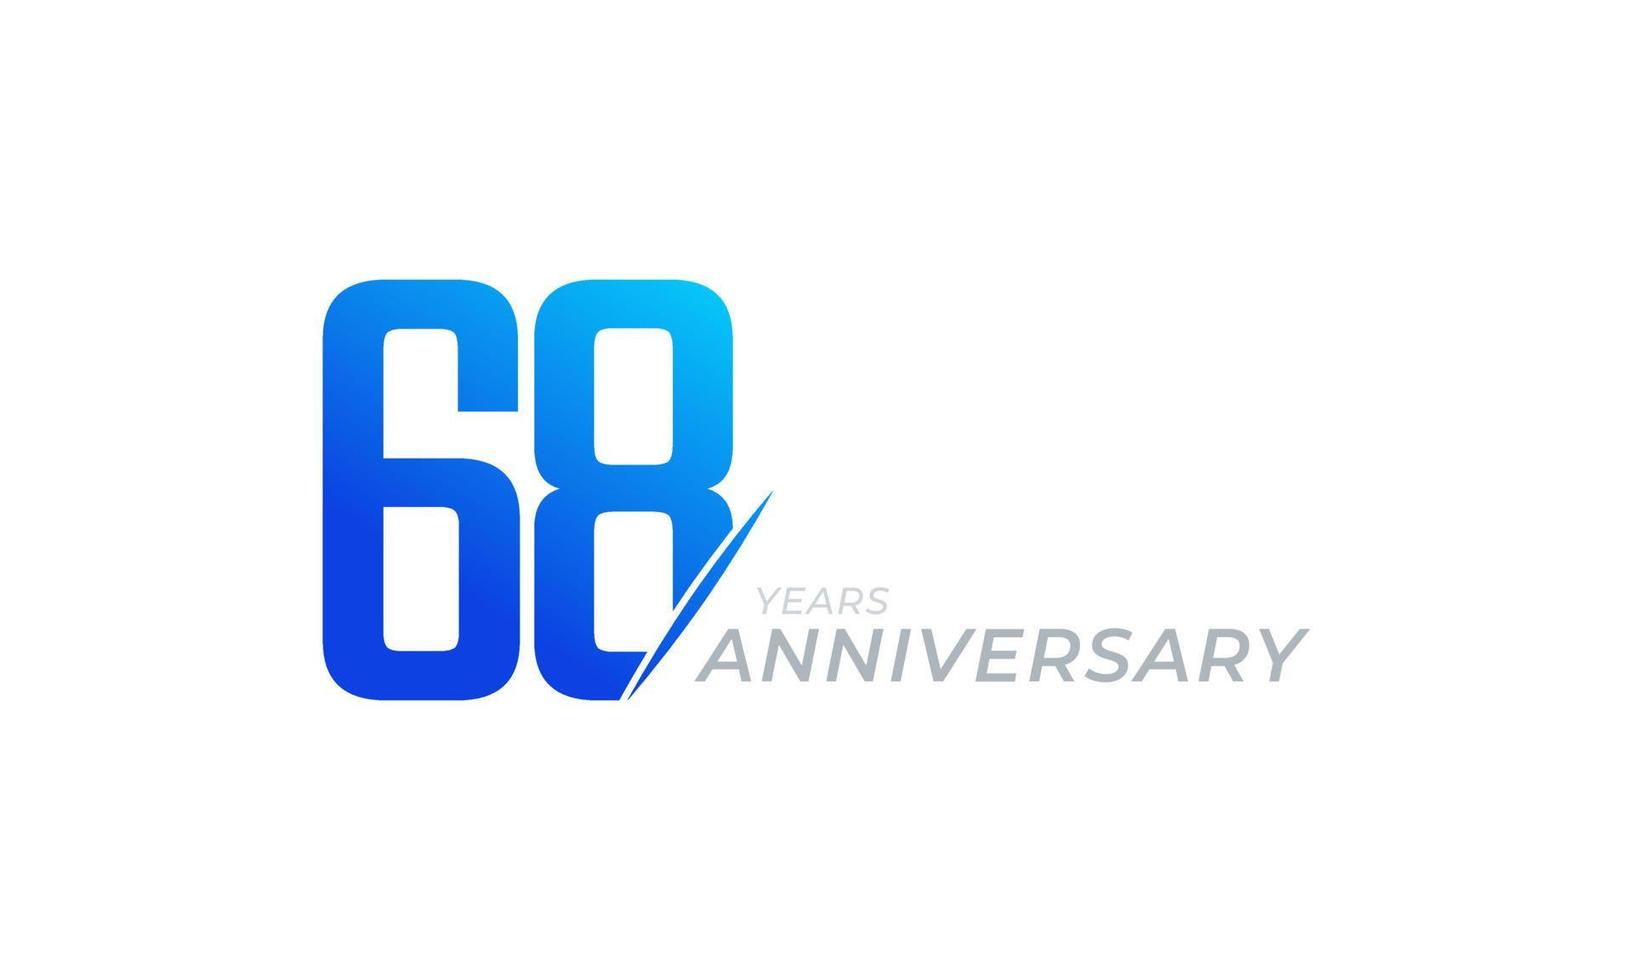 68 Year Anniversary Celebration Vector. Happy Anniversary Greeting Celebrates Template Design Illustration vector